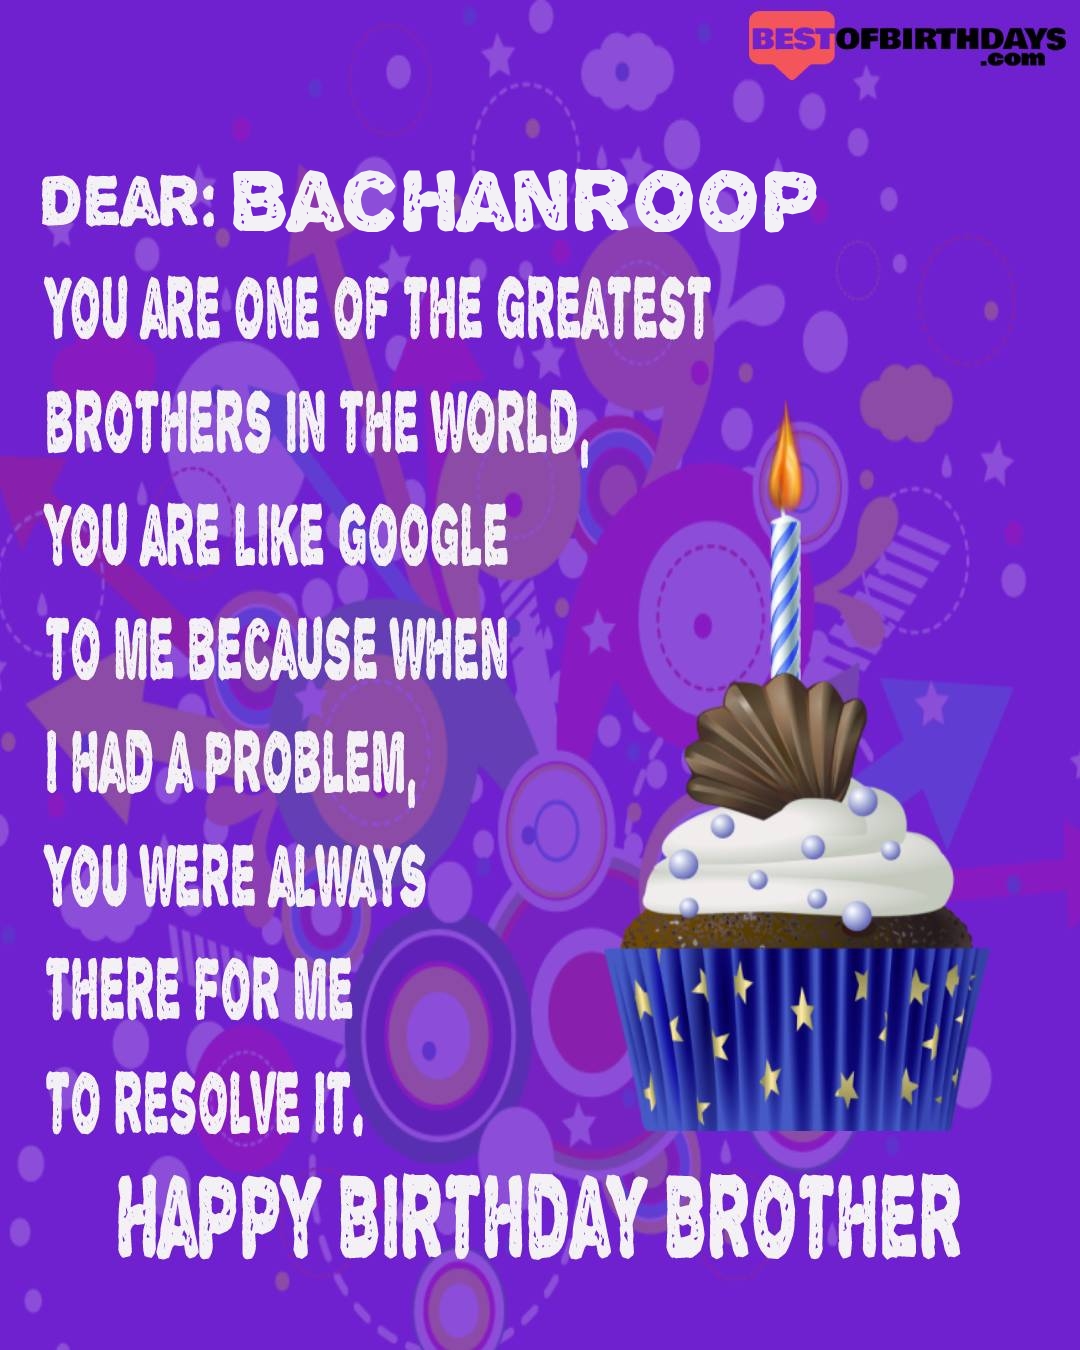 Happy birthday bachanroop bhai brother bro